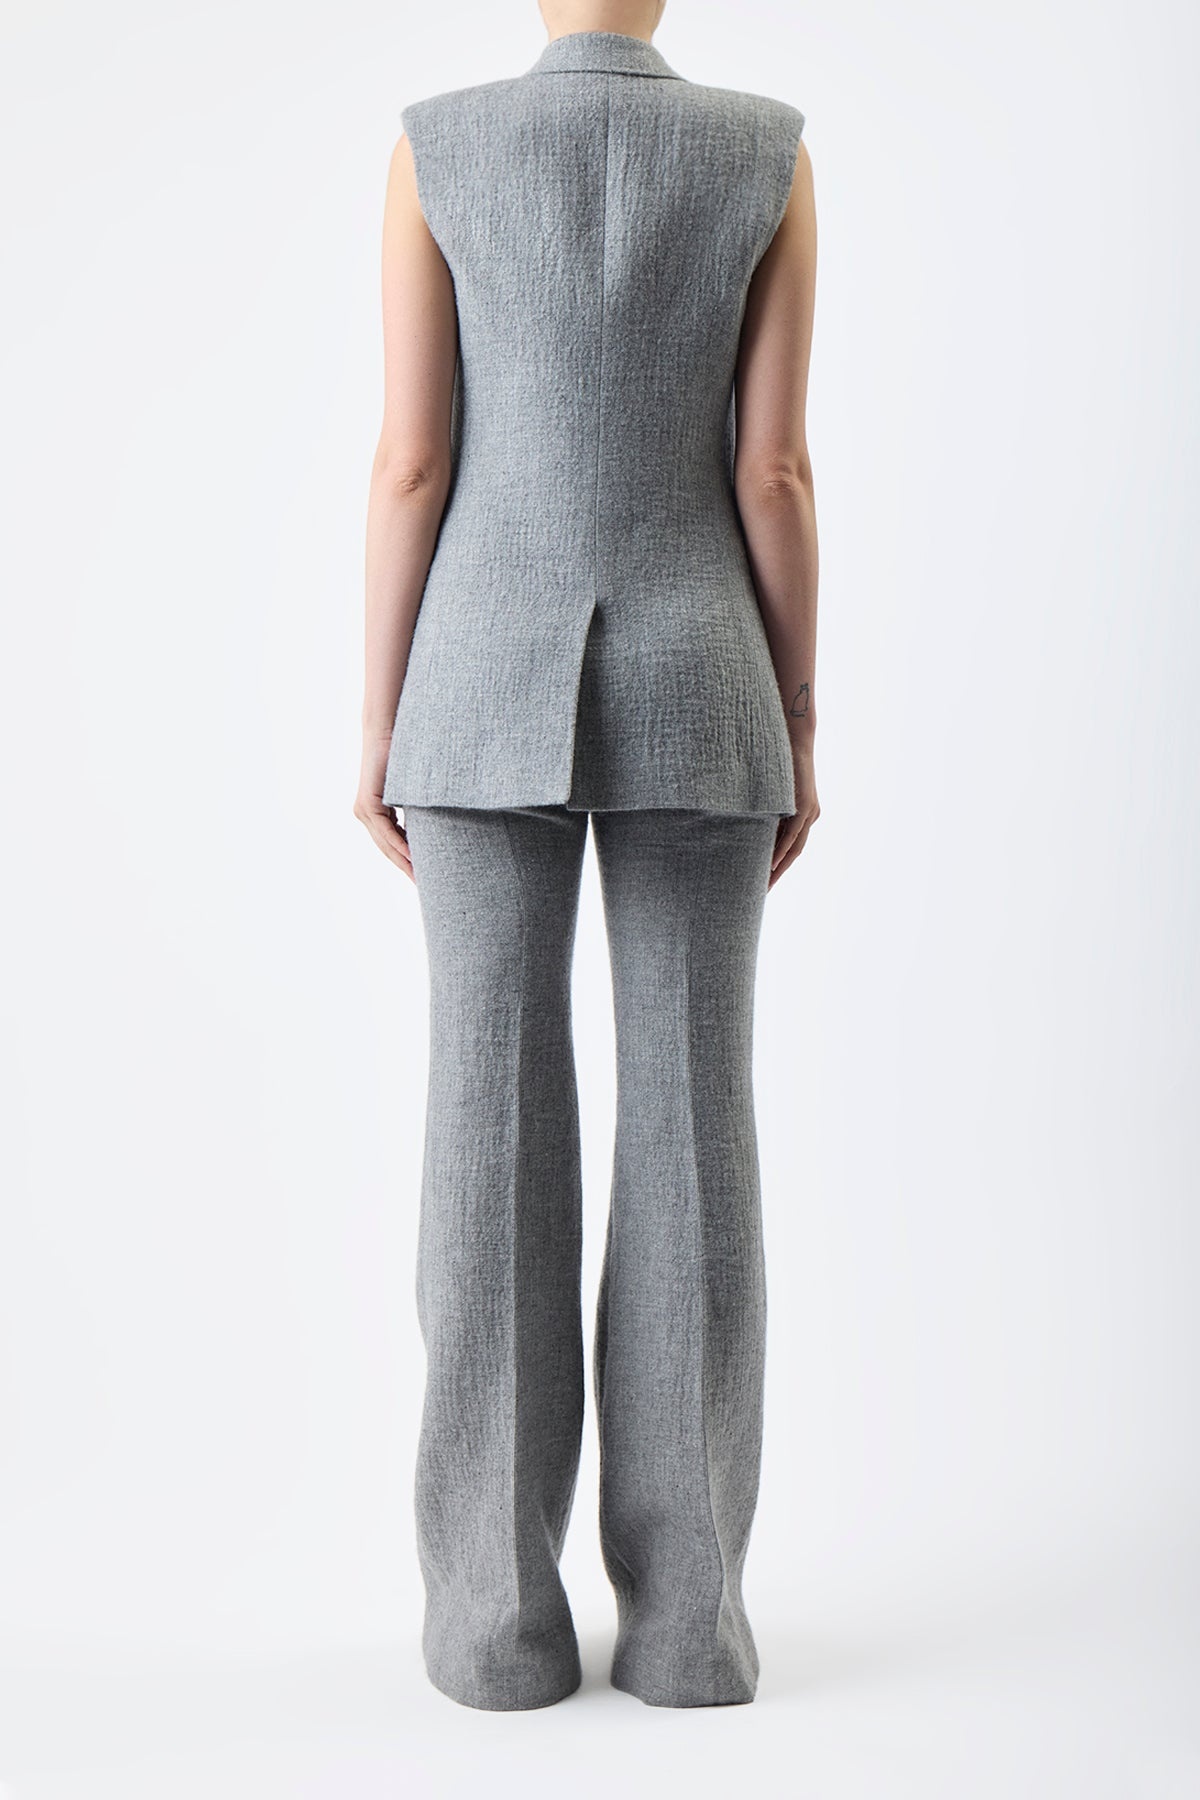 Mayte Vest in Light Grey Cashmere Linen - 5